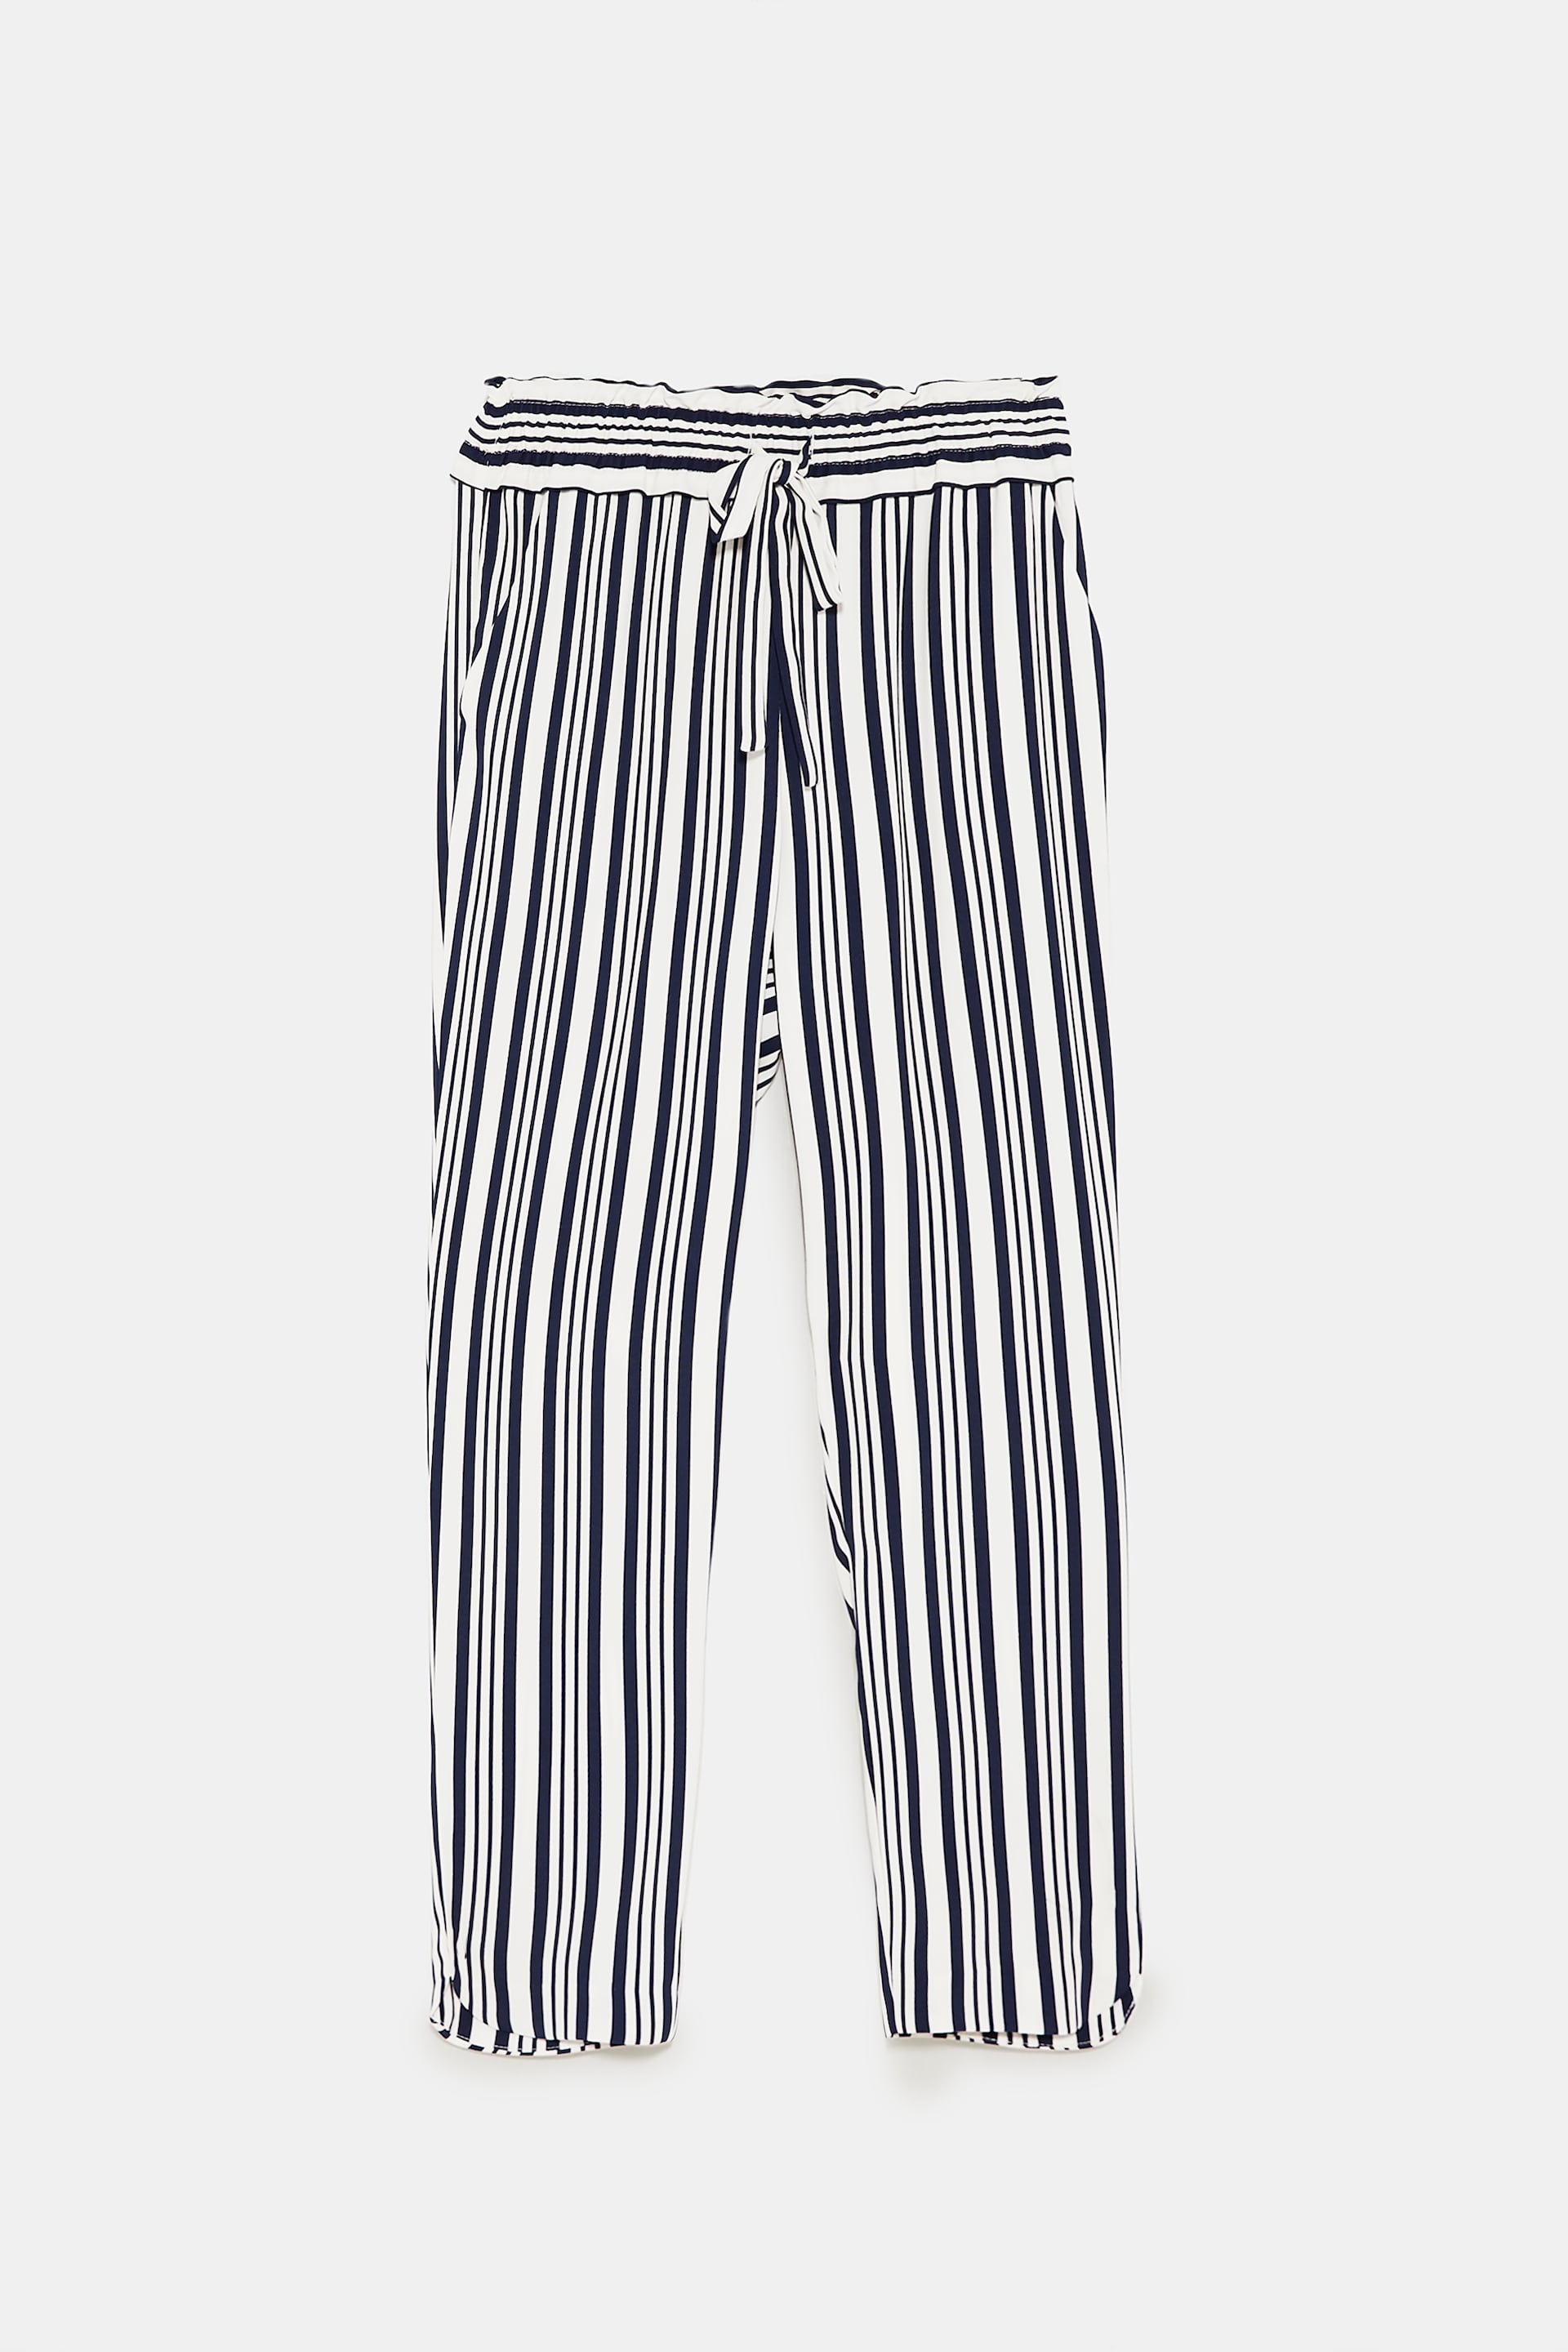 Zara loose fit stripe pants